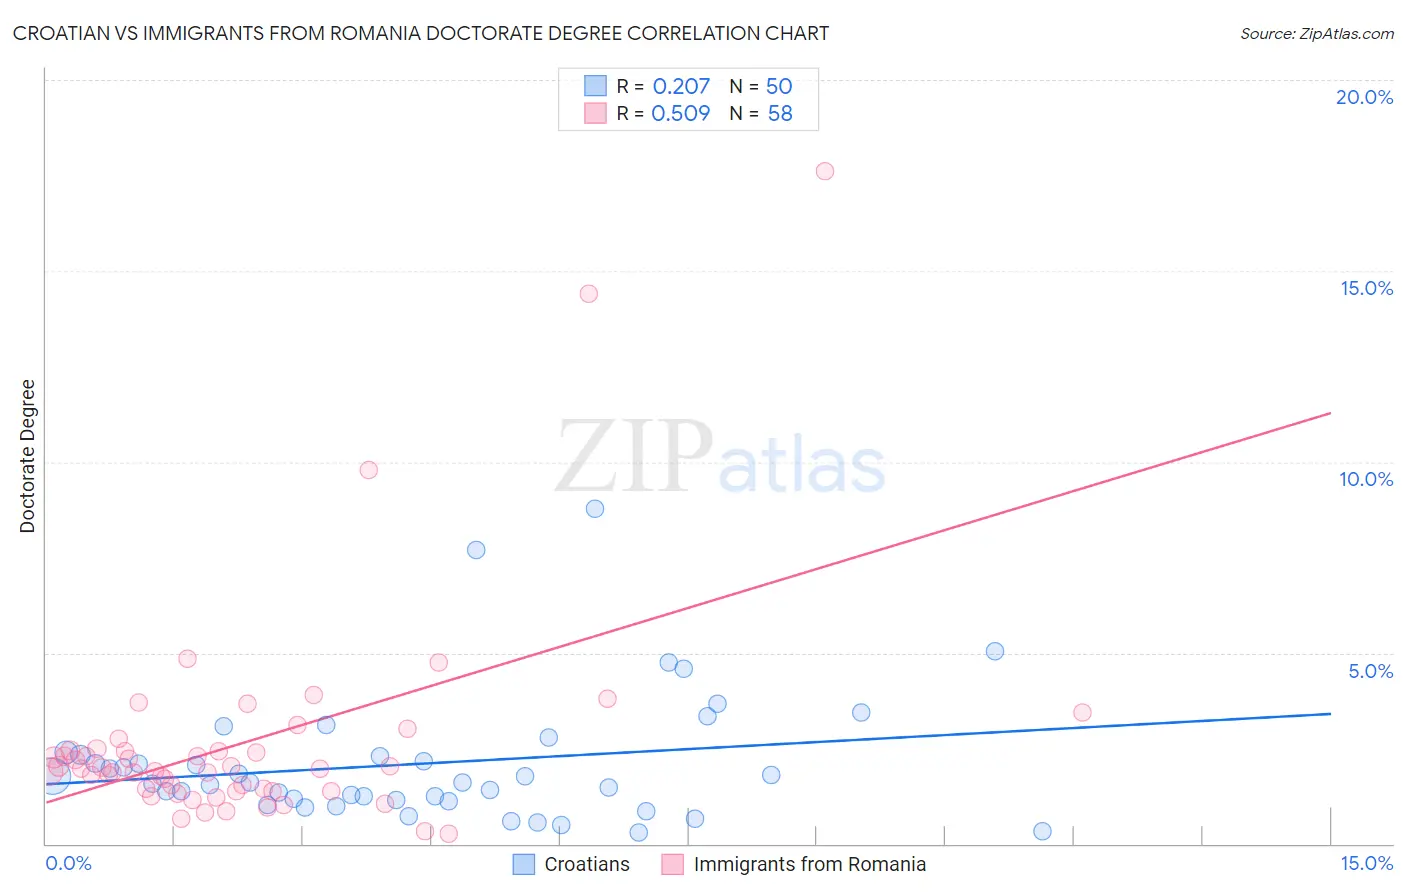 Croatian vs Immigrants from Romania Doctorate Degree